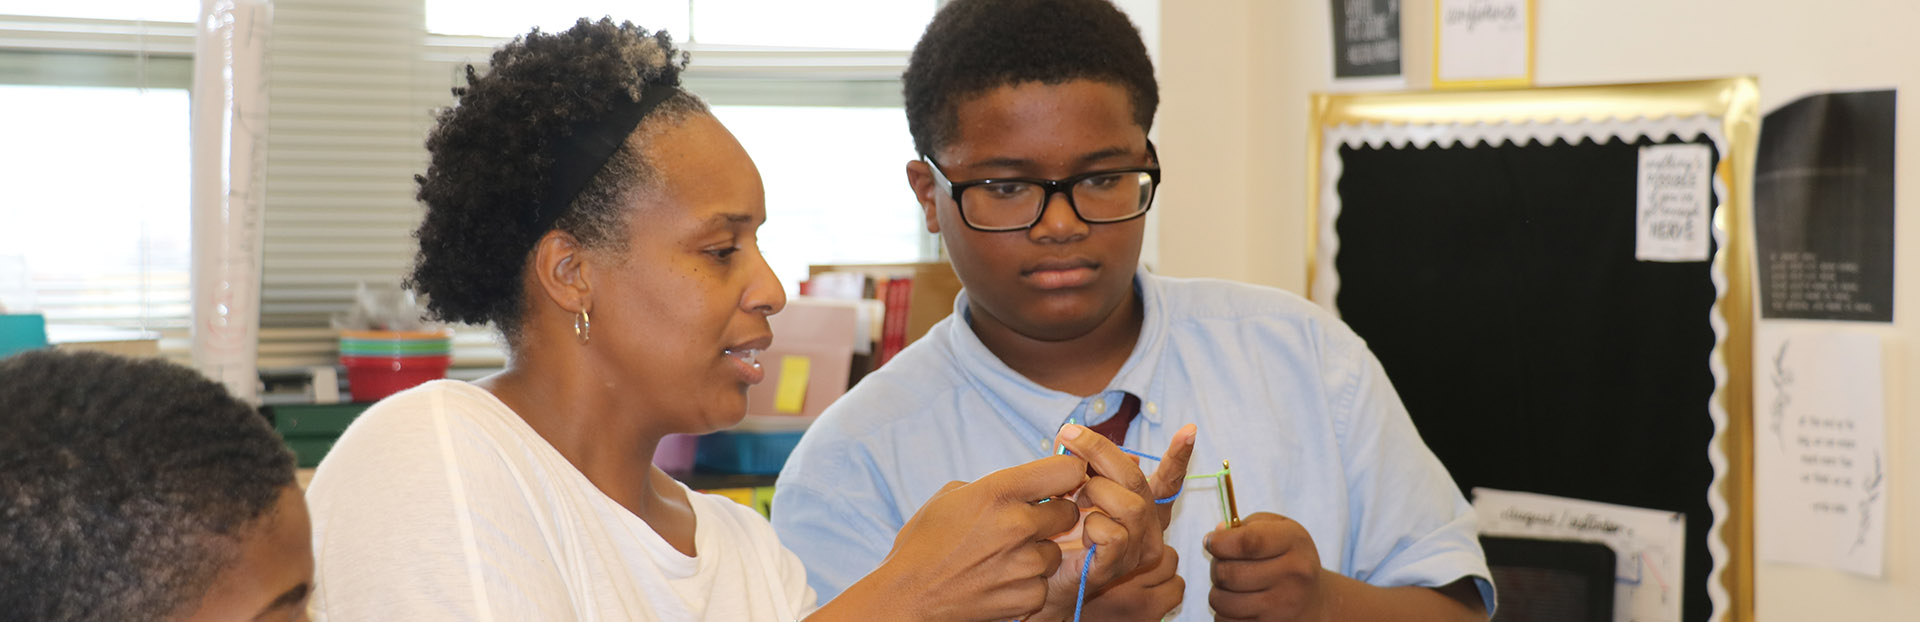 Saint Ignatius Loyola Academy, Baltimore : l’éducation qui transforme